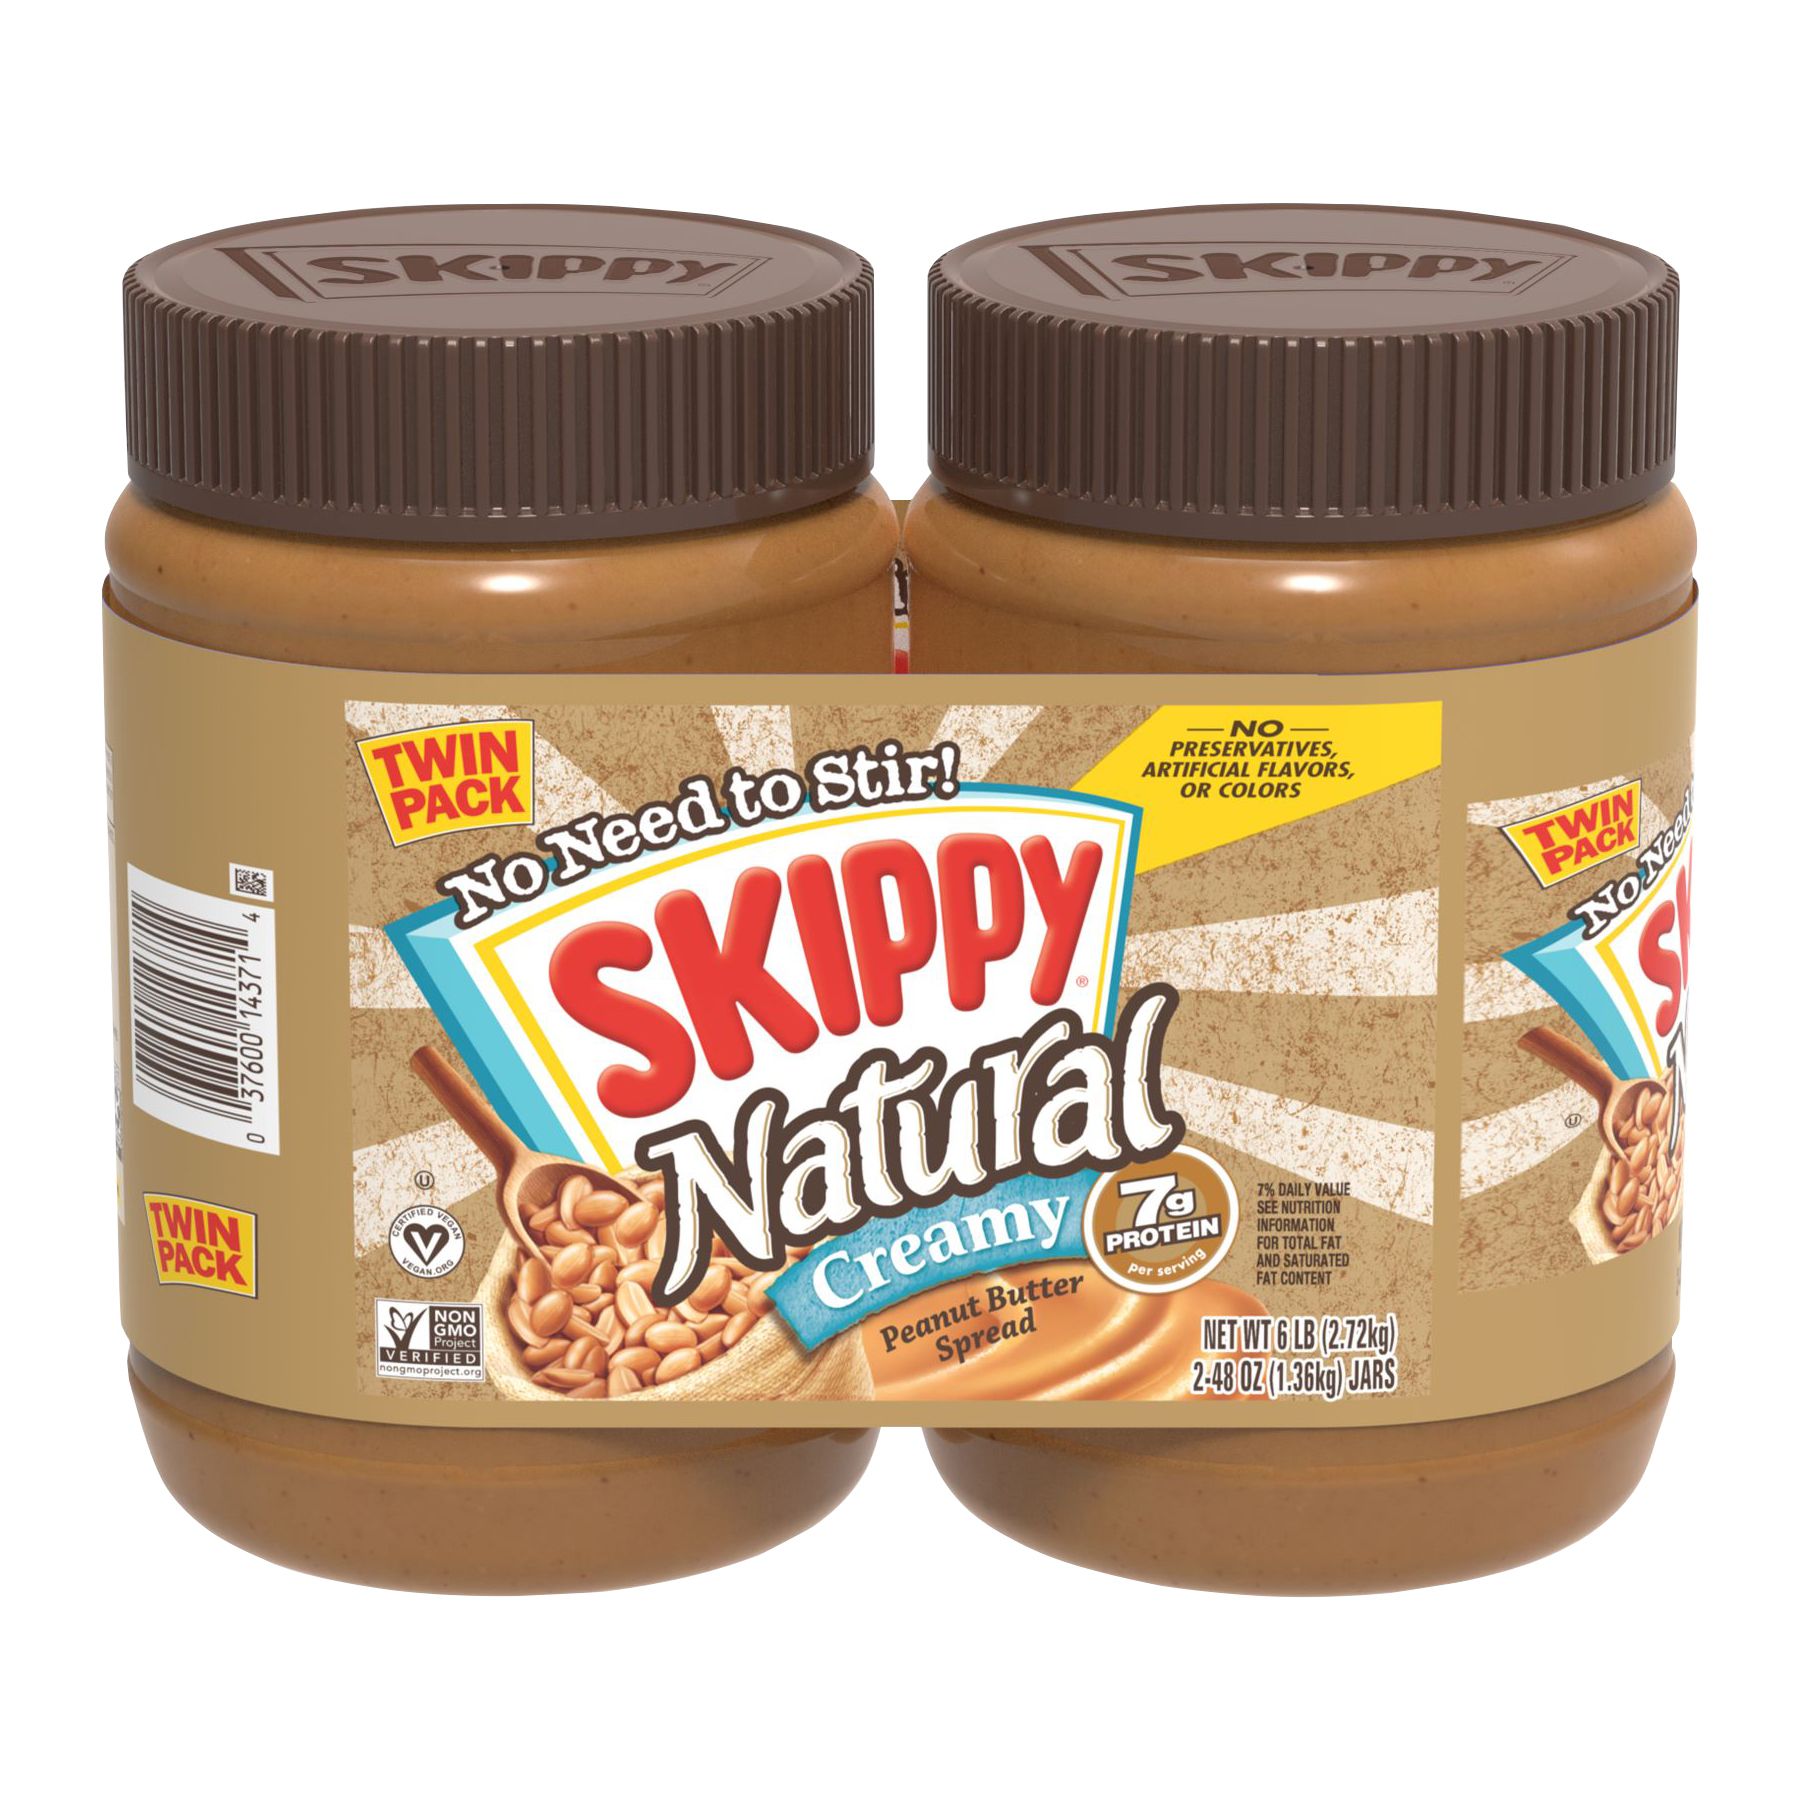 Skippy Creamy Peanut Butter 4 lb. Jar